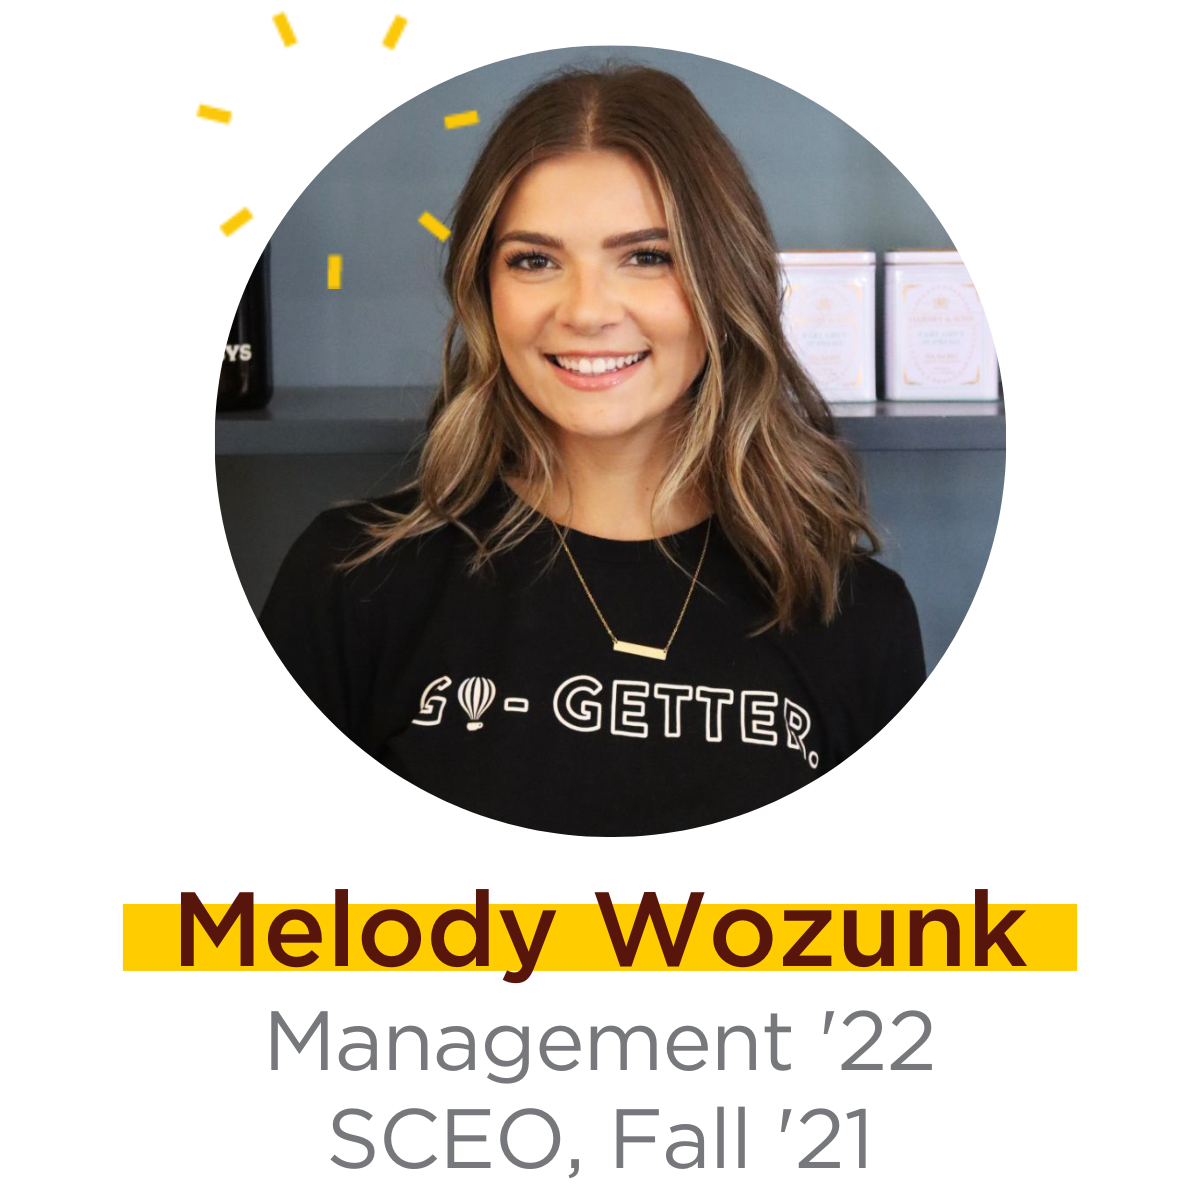 Melody Wozunk, SCEO Fall '21